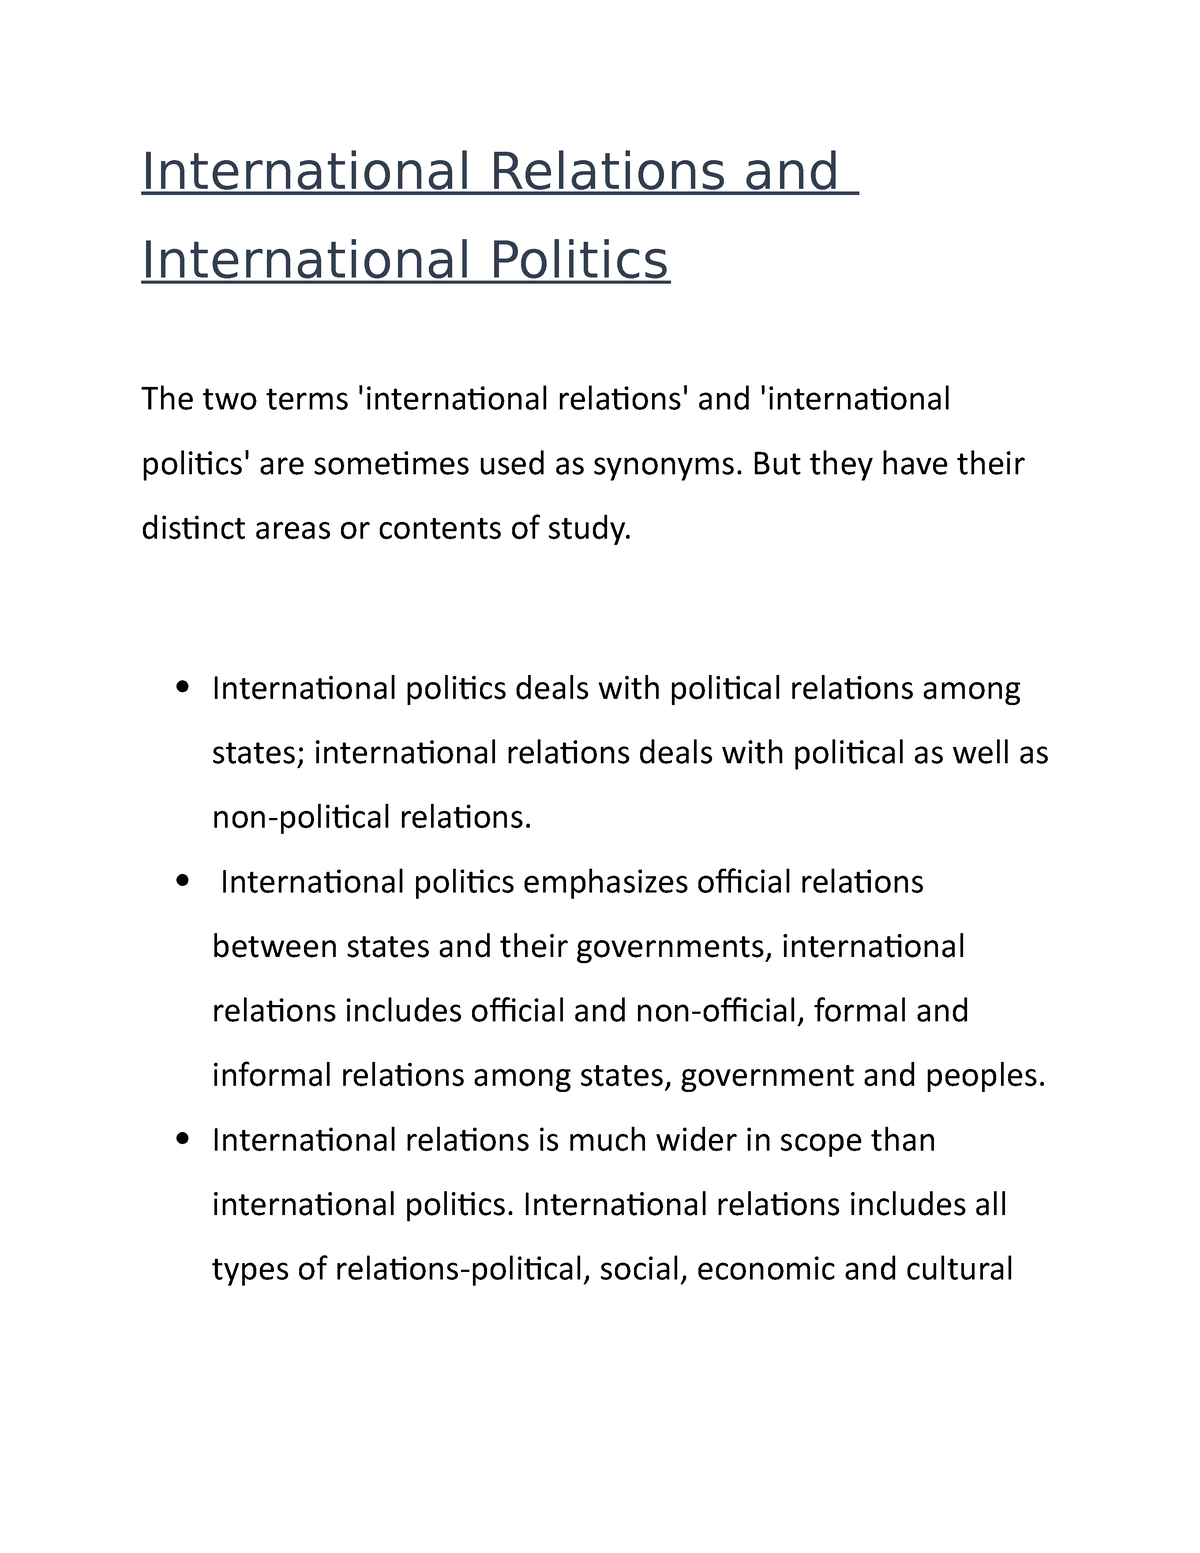 politics and international relations dissertation topics